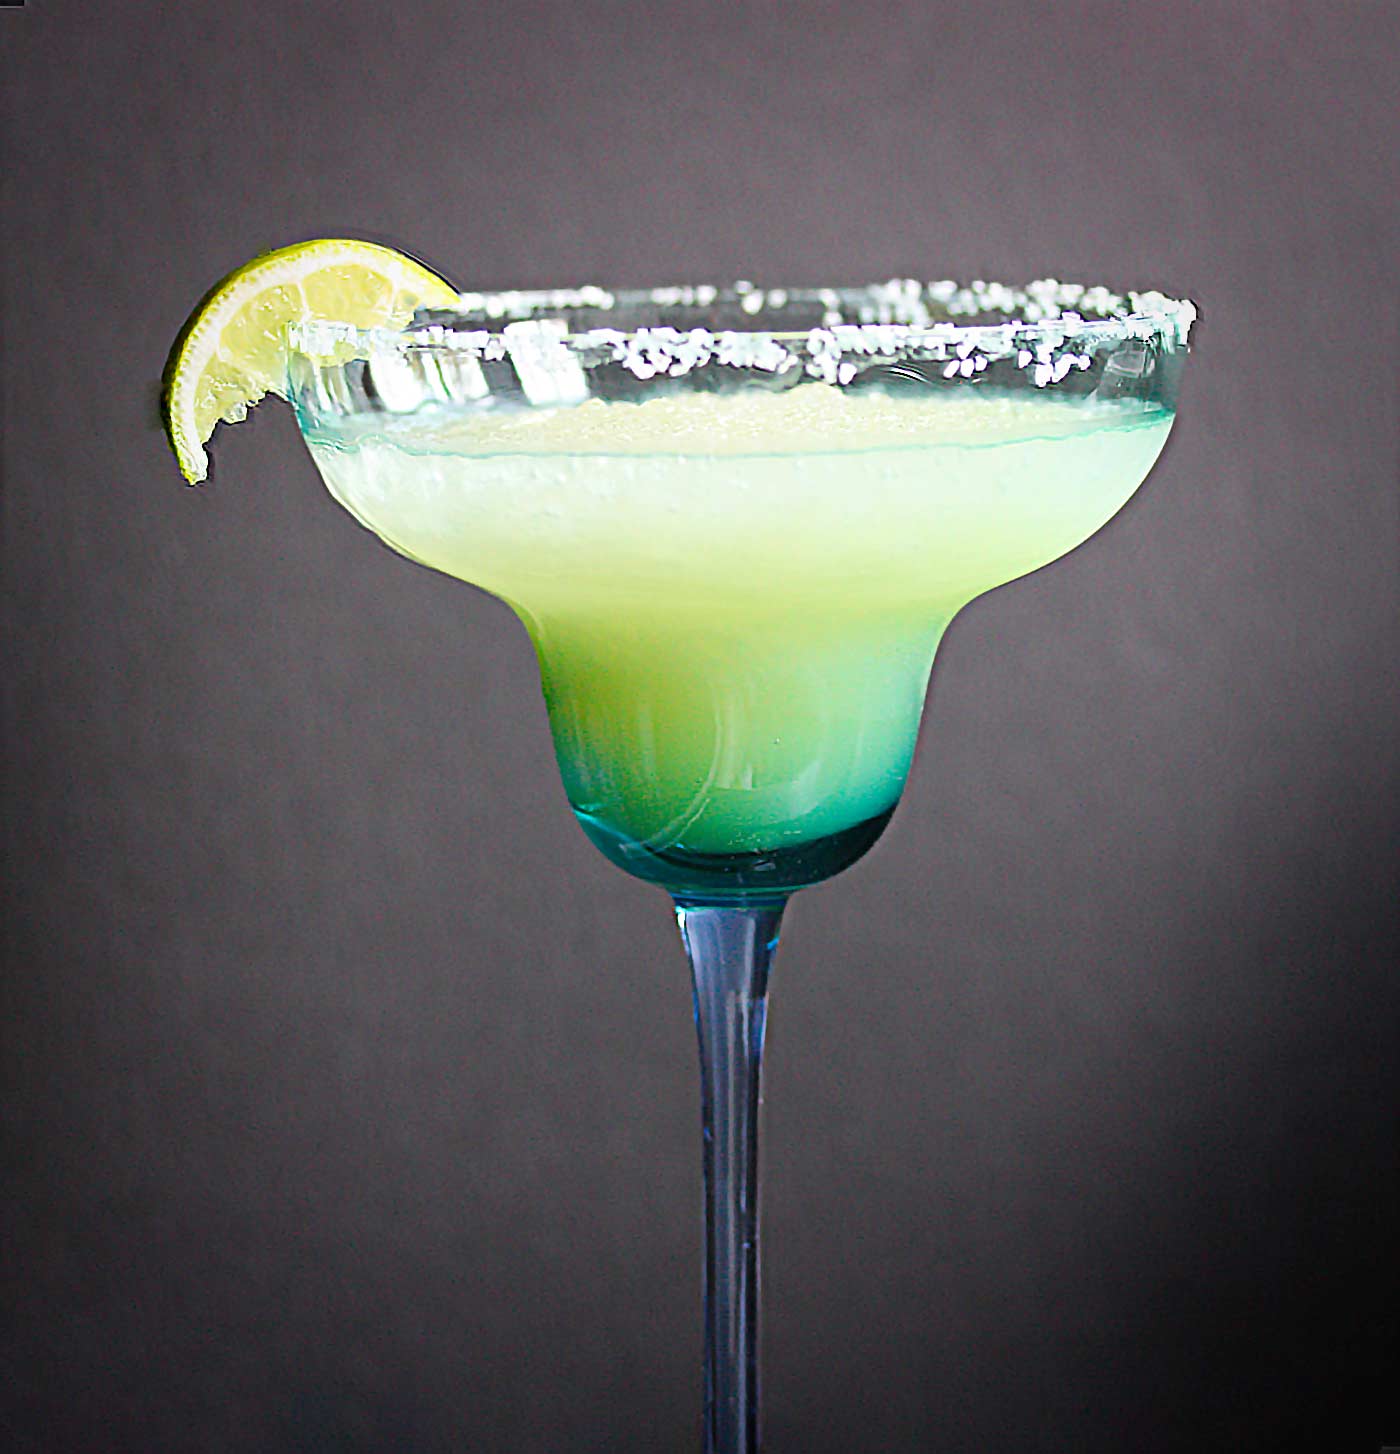 New Year's Margarita in a beautiful blue and green margarita glass